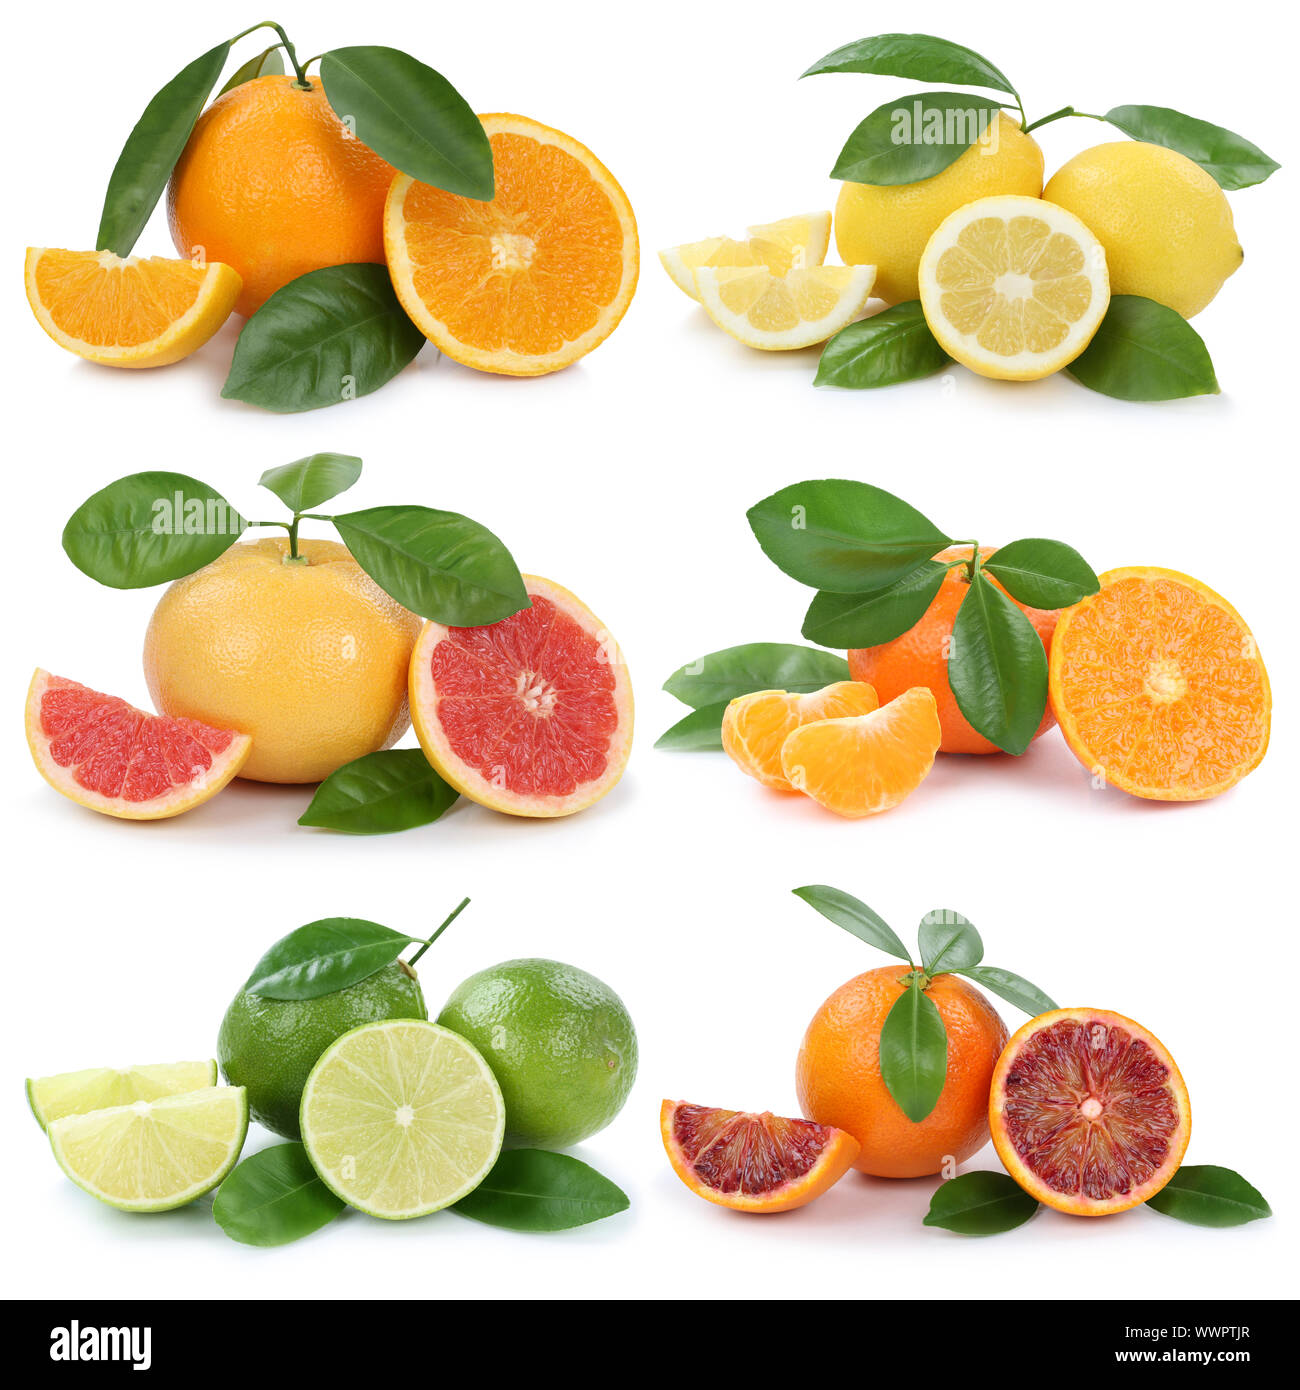 Collection Oranges Lemons Mandarins Grapefruit Fruits Optional Stock Photo